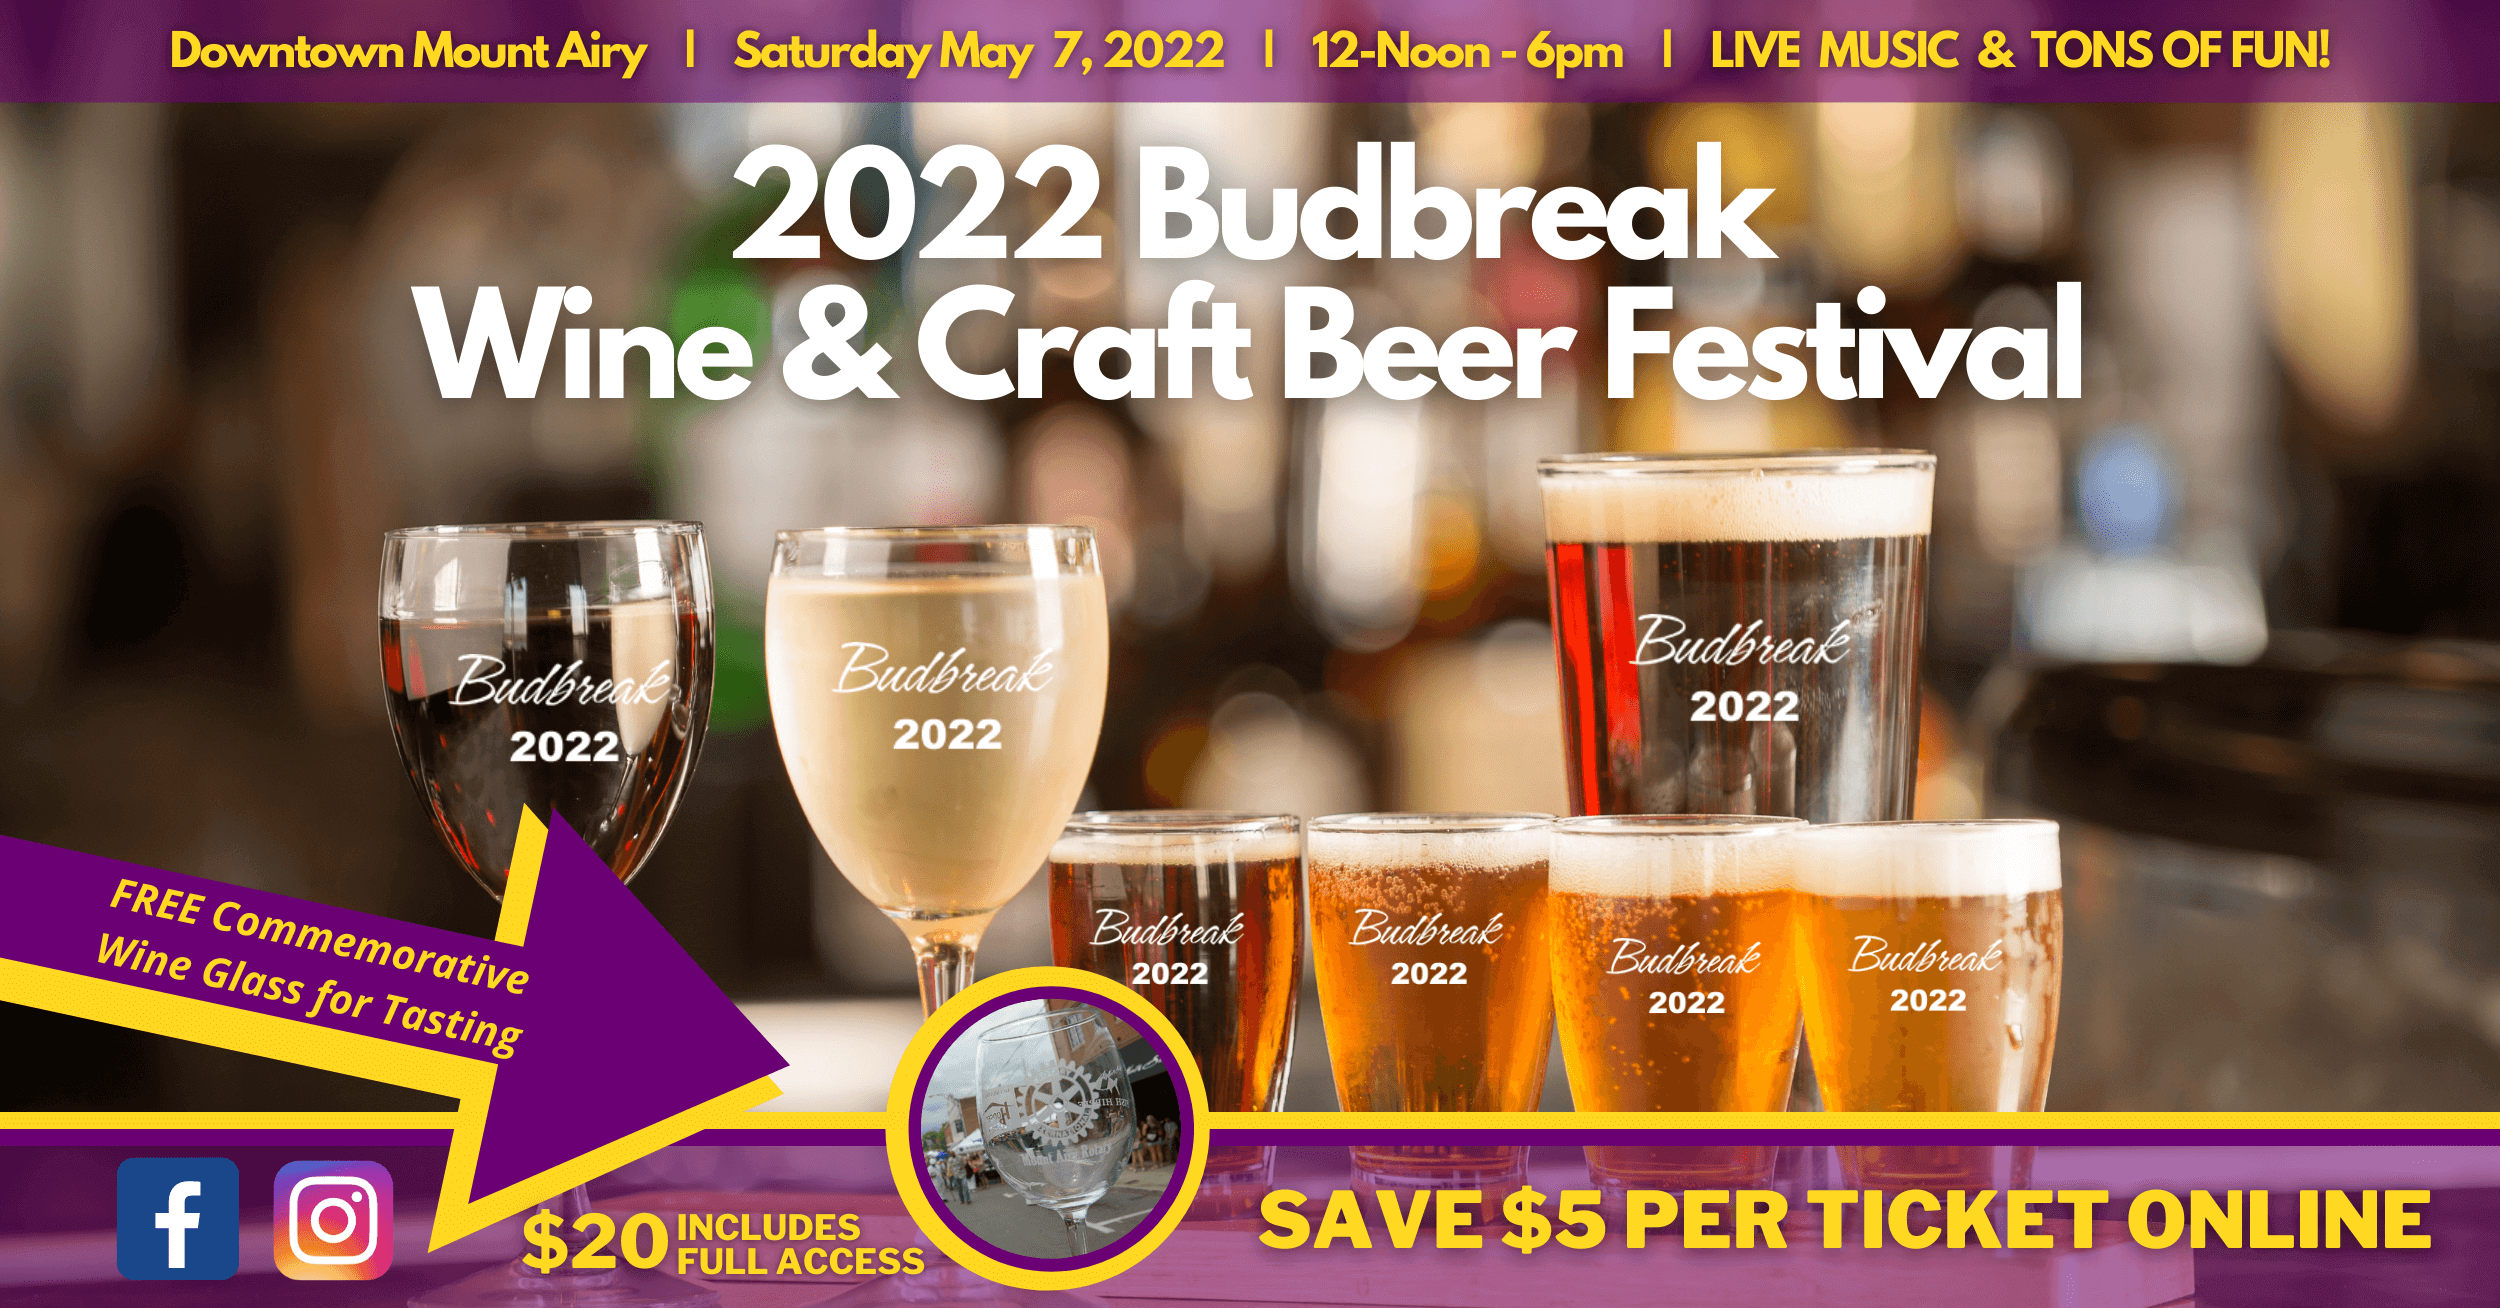 2018 Budbreak Wine and Craft Beer Festival